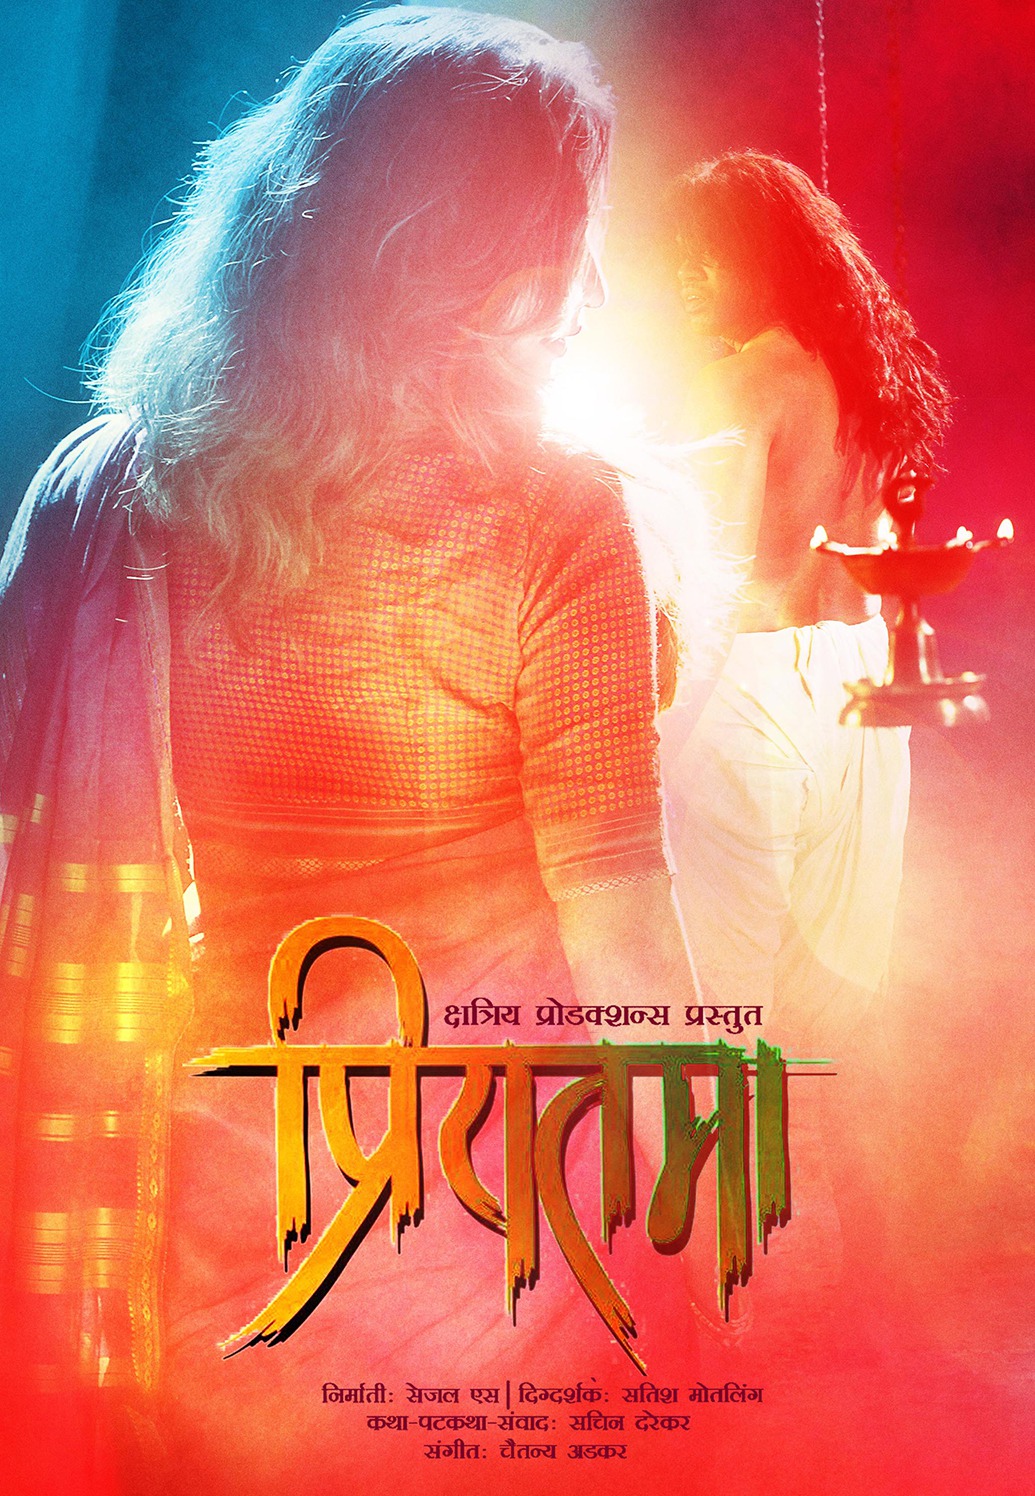 Extra Large Movie Poster Image for Priyatama (#9 of 9)